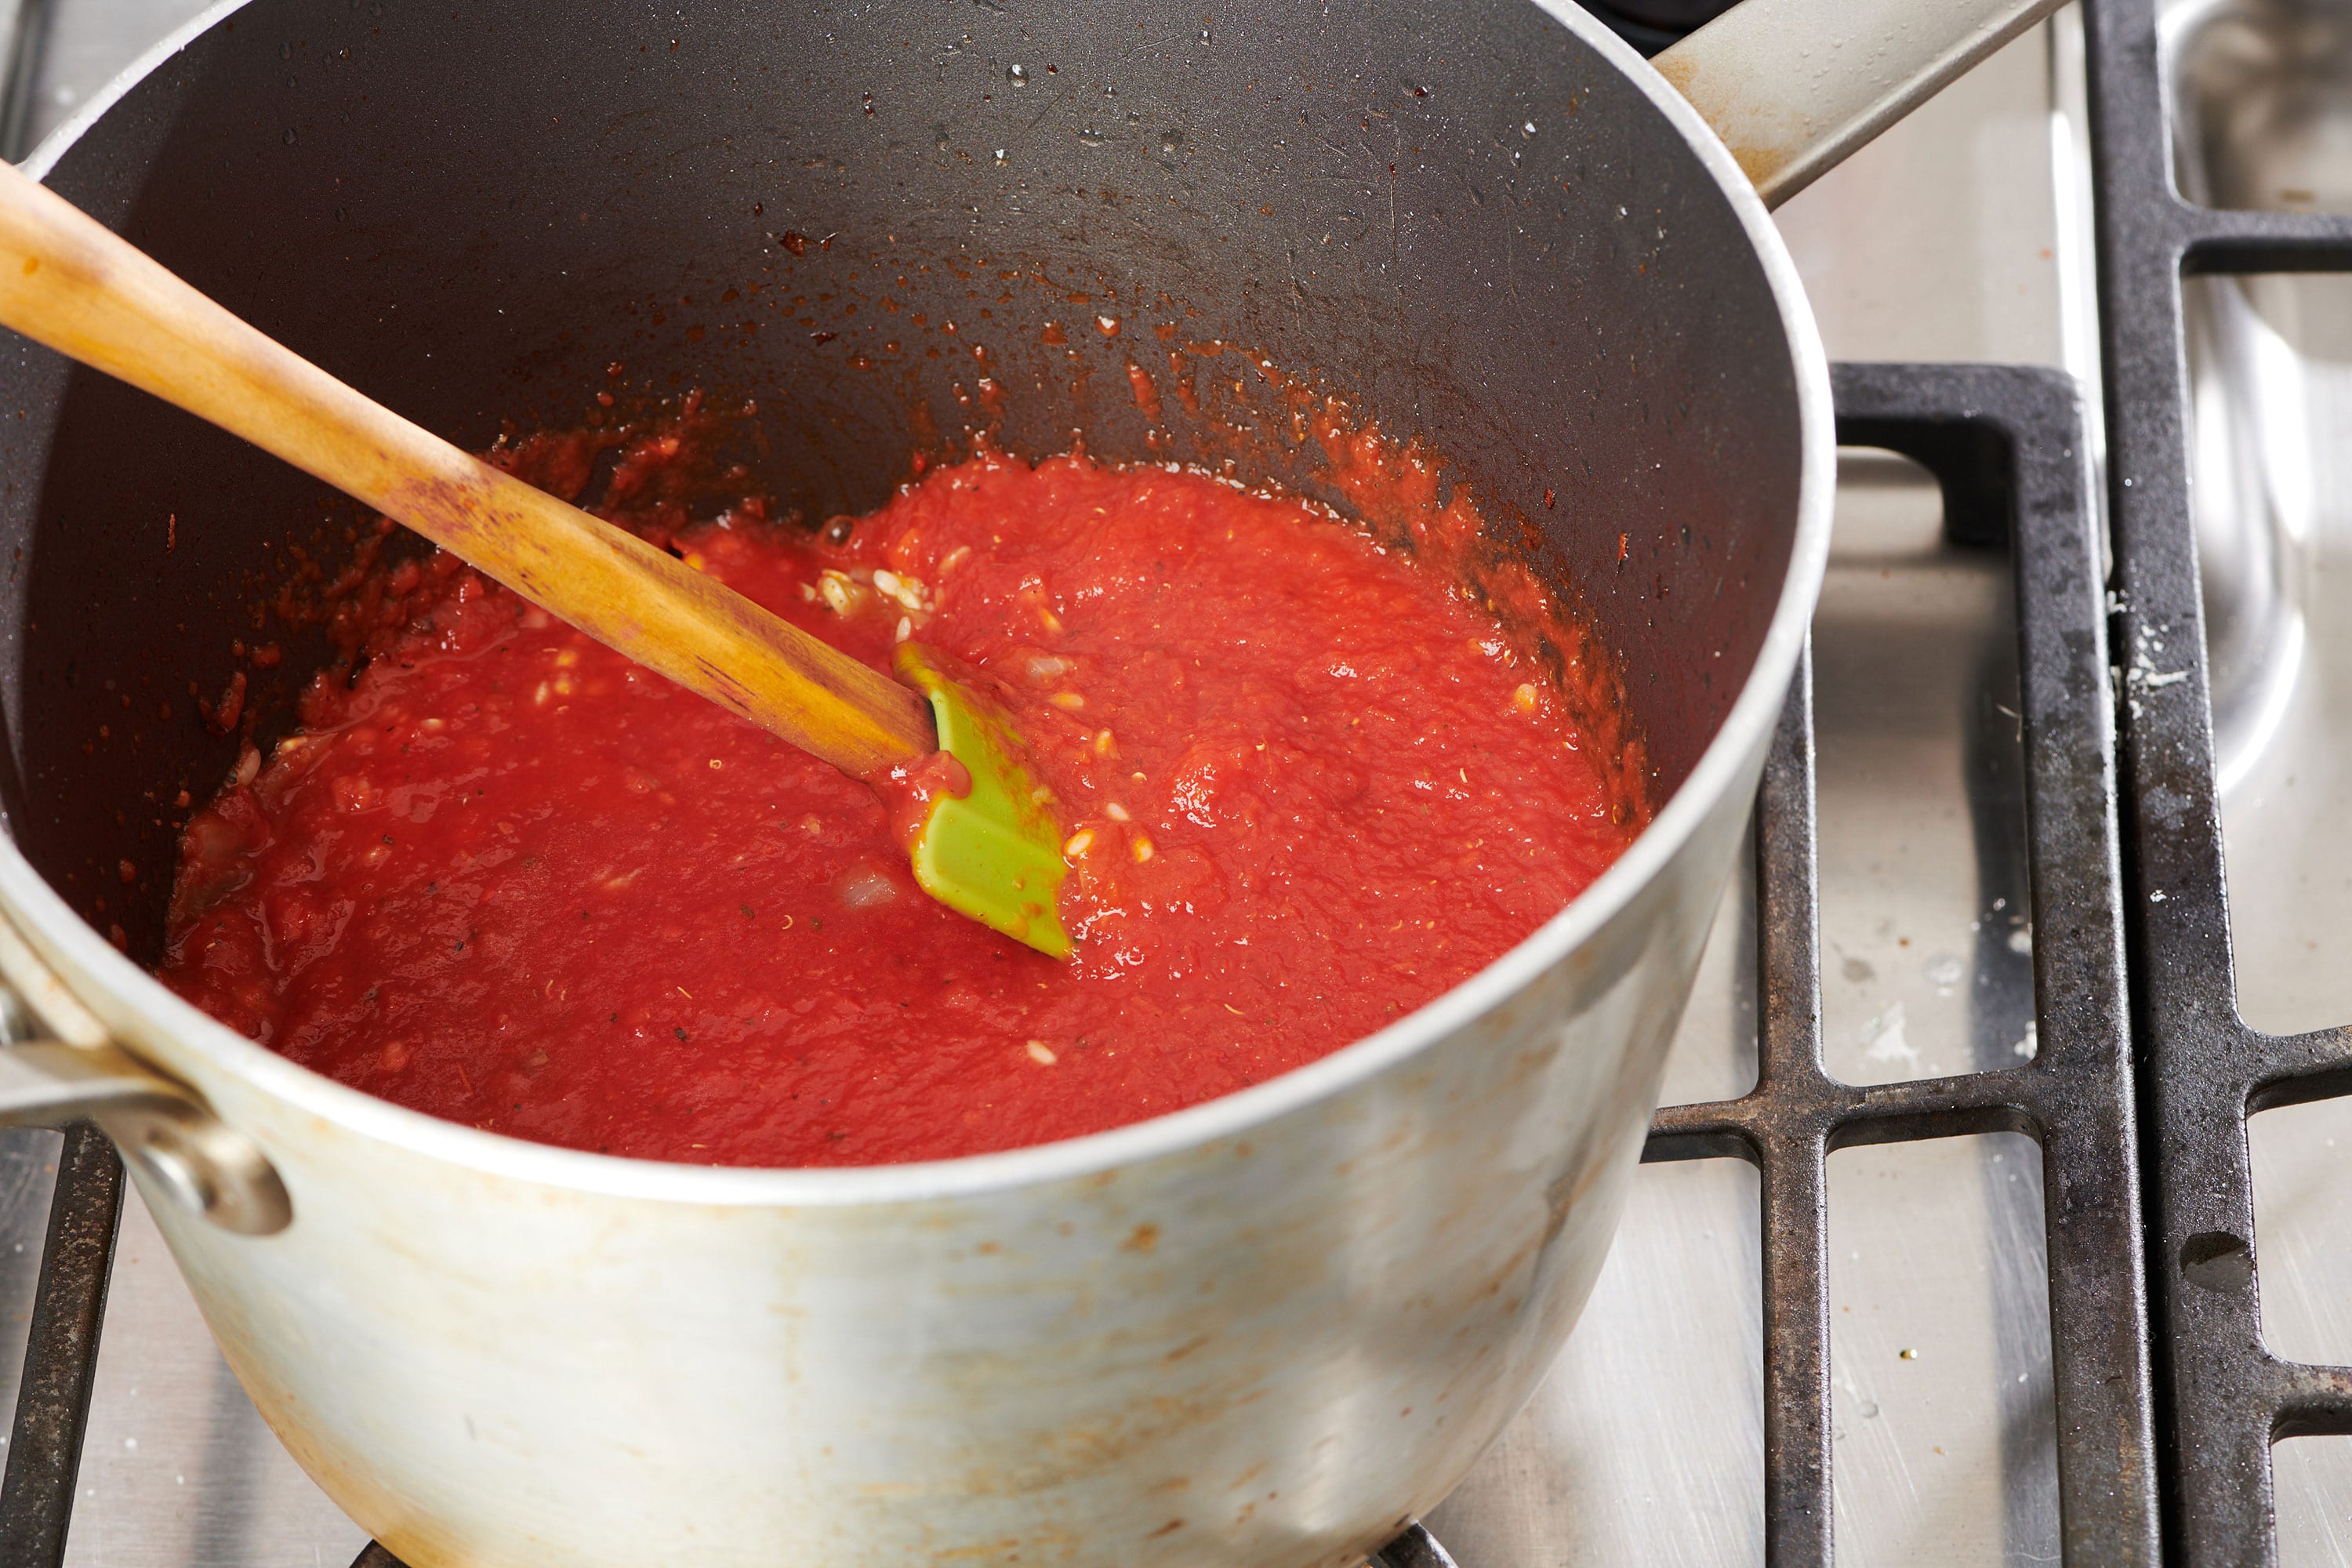 Tomato mixture cooking in saucepan.